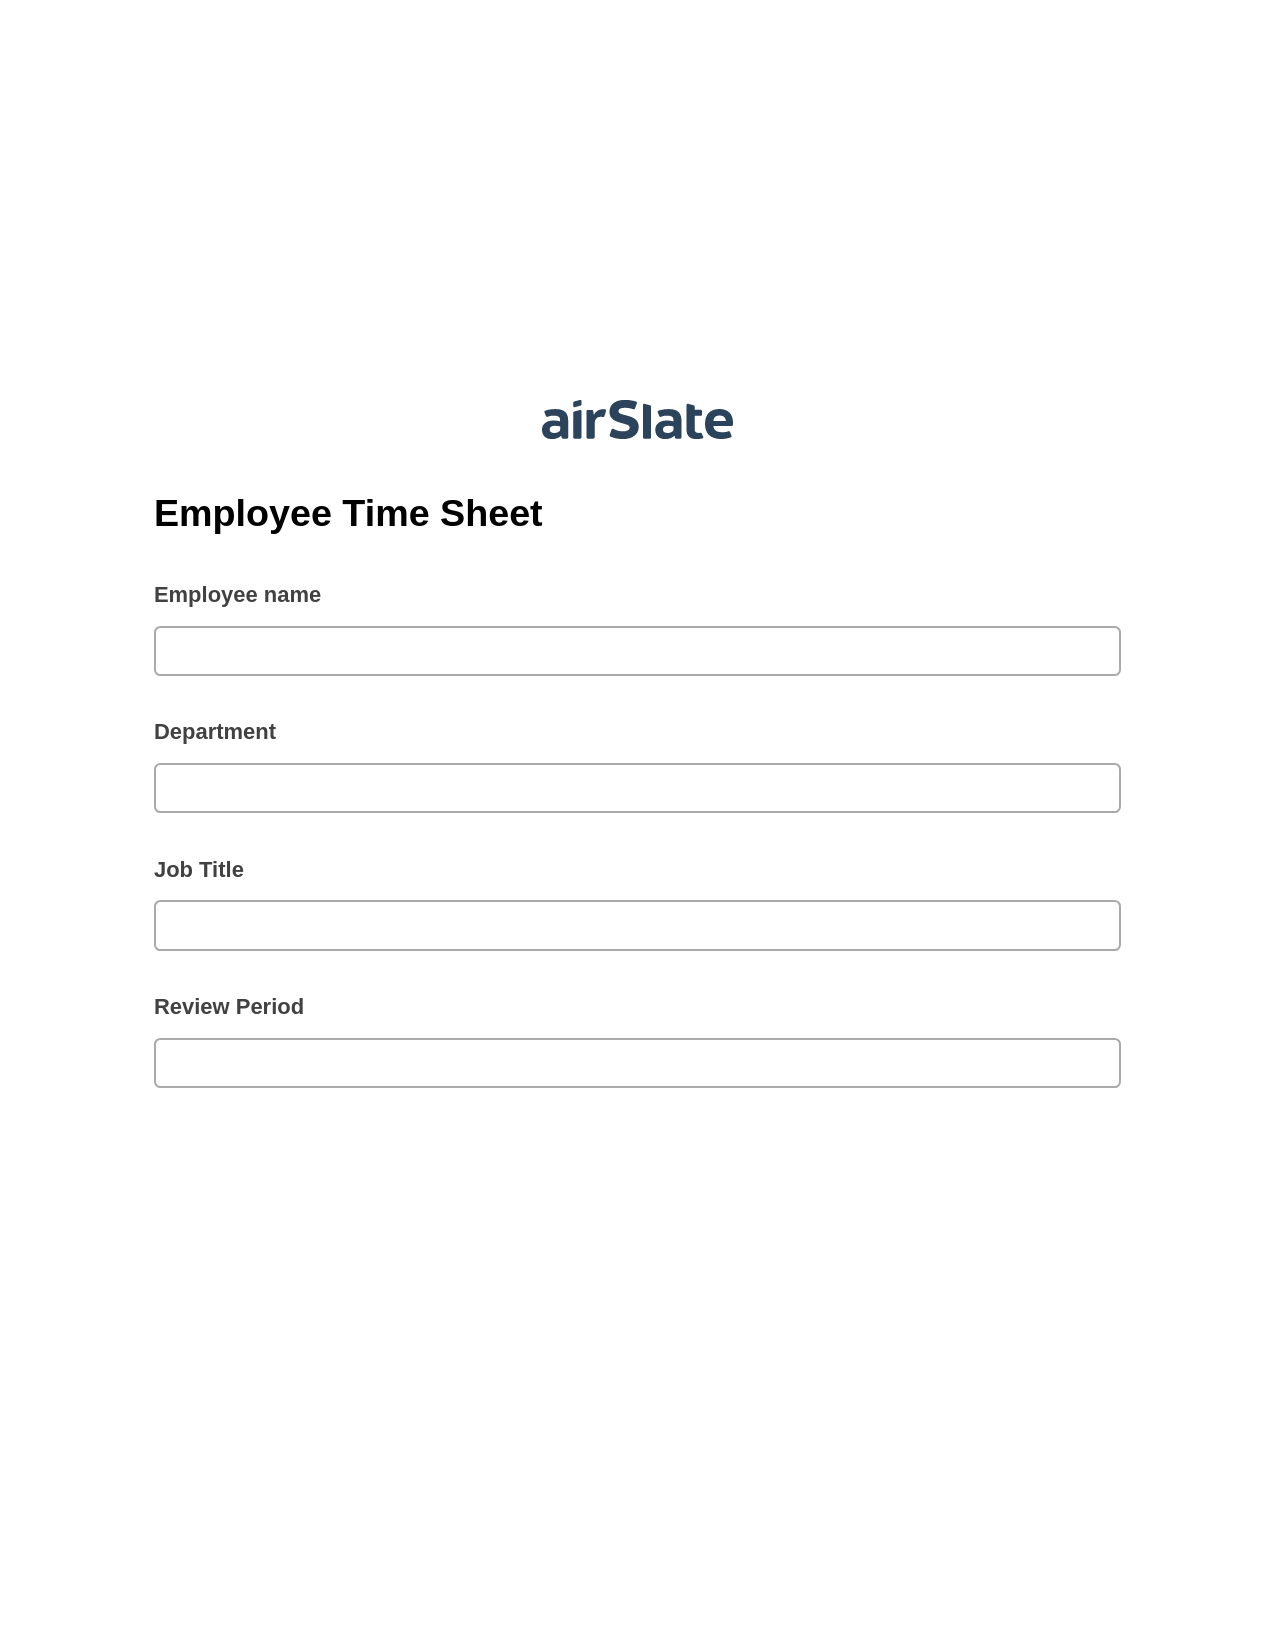 Employee Time Sheet Pre-fill Dropdowns from Google Sheet Bot, Create slate addon, Archive to Google Drive Bot